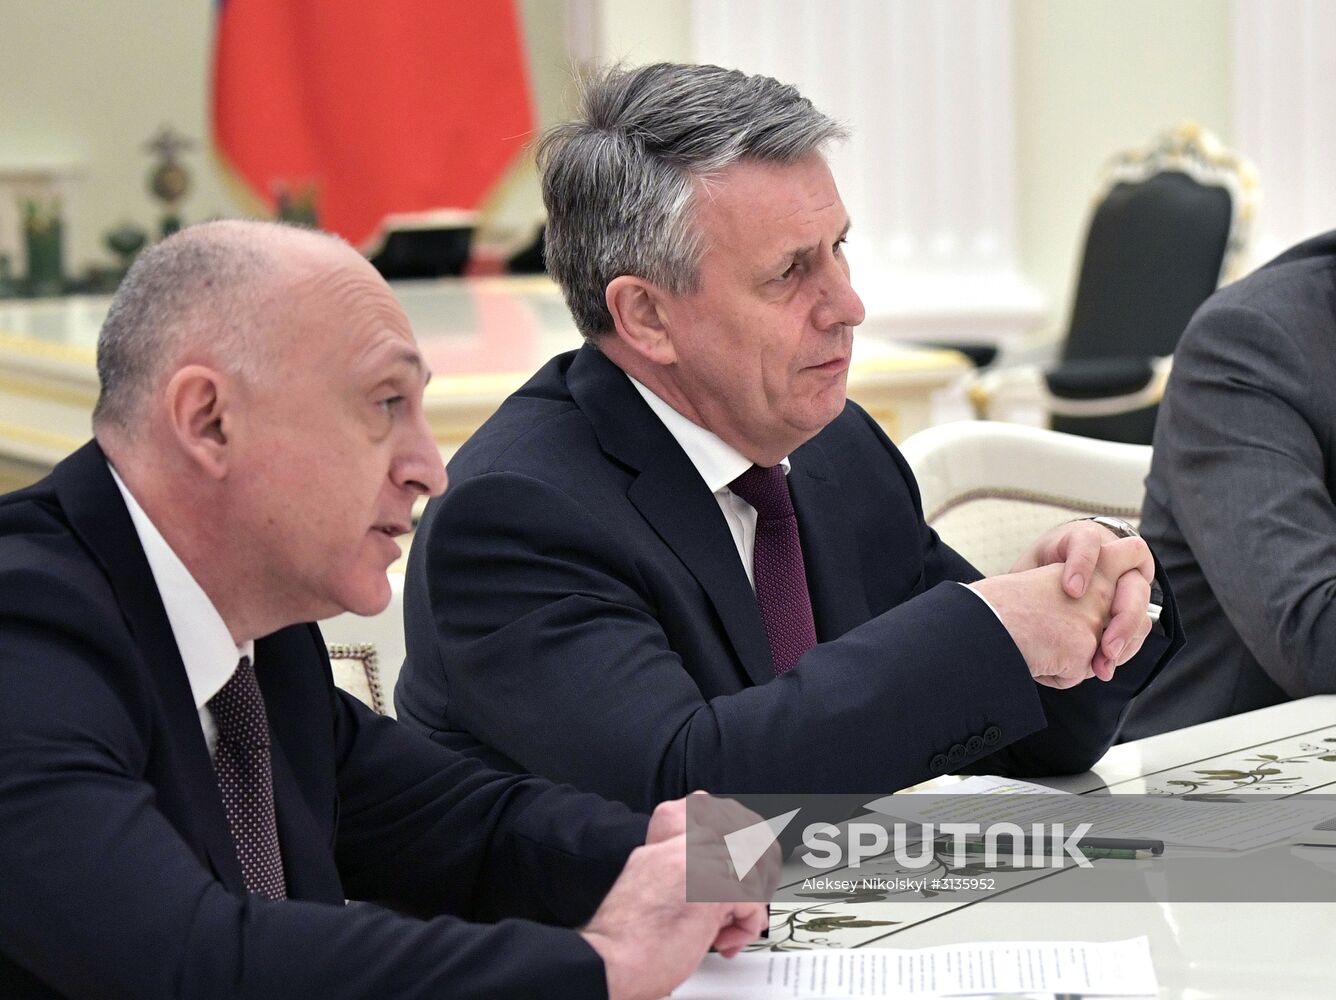 Russian President Vladimir Putin meets with Royal Dutch Shell CEO Ben van Beurden